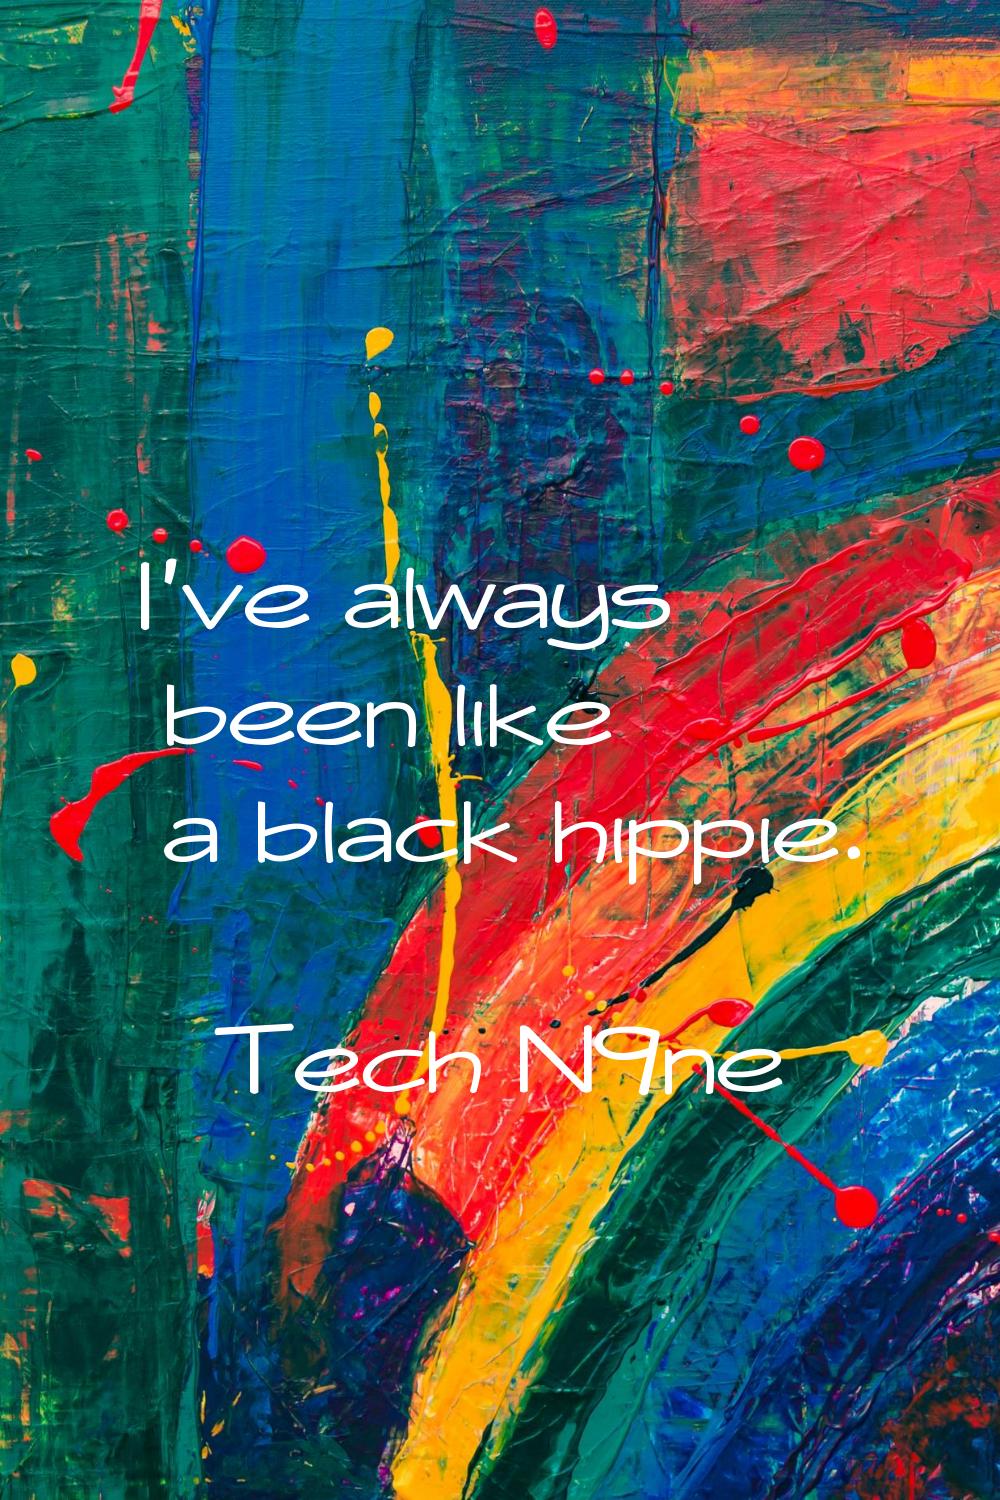 I've always been like a black hippie.